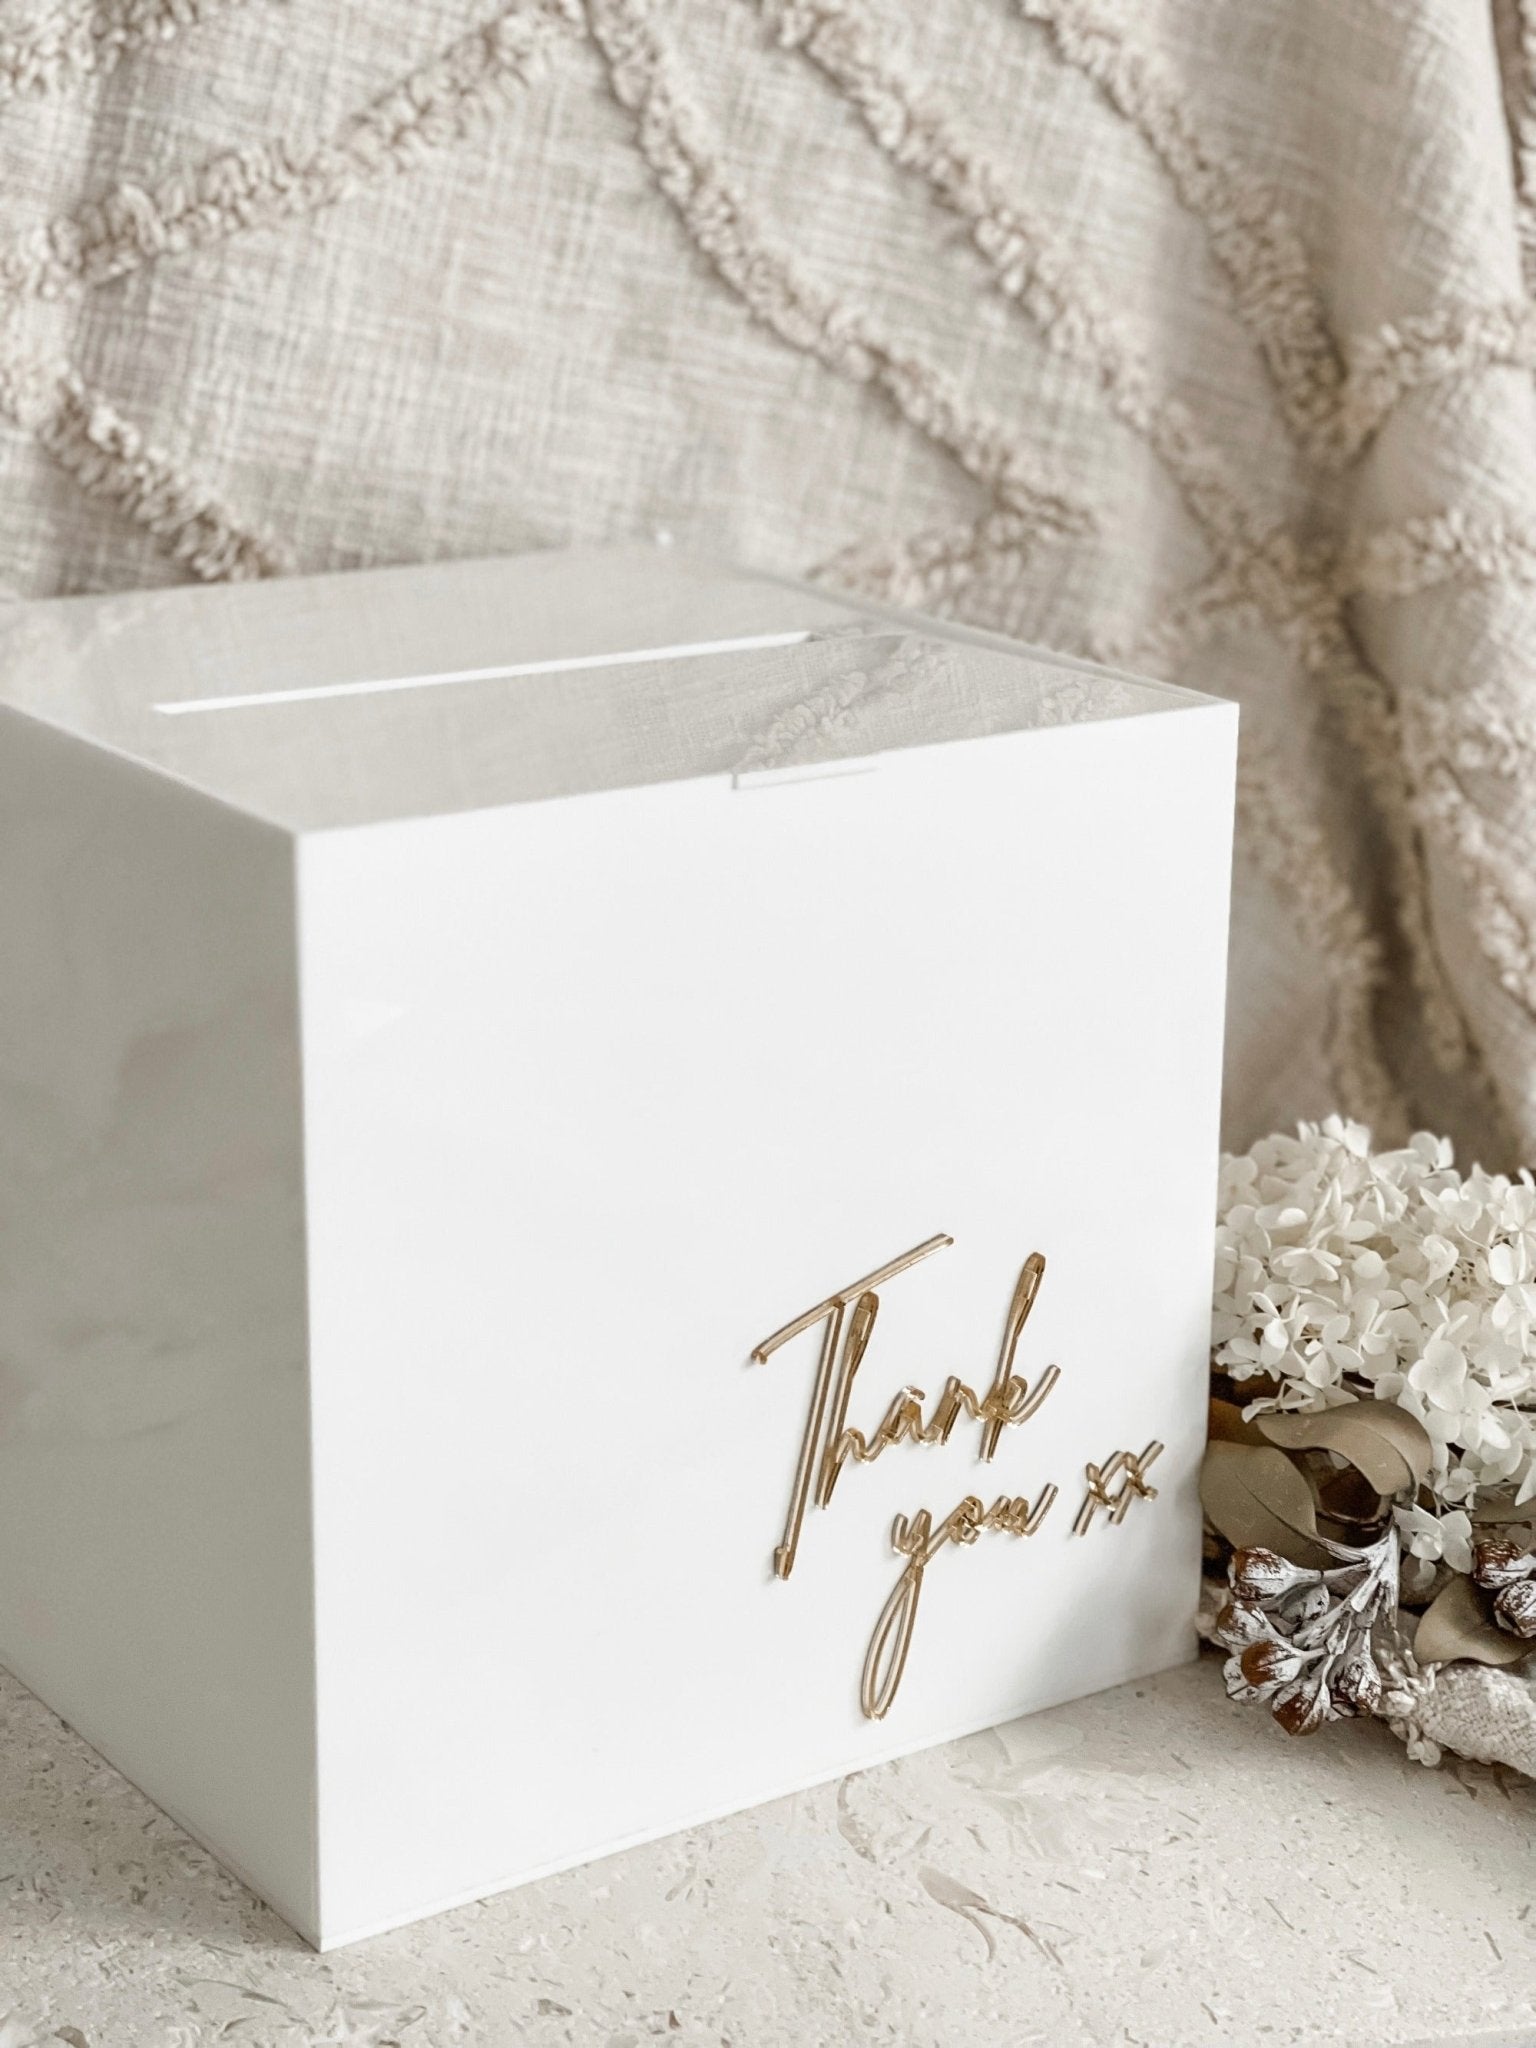 Gloss White Acrylic Wishing Well - The Humble Gift Co.